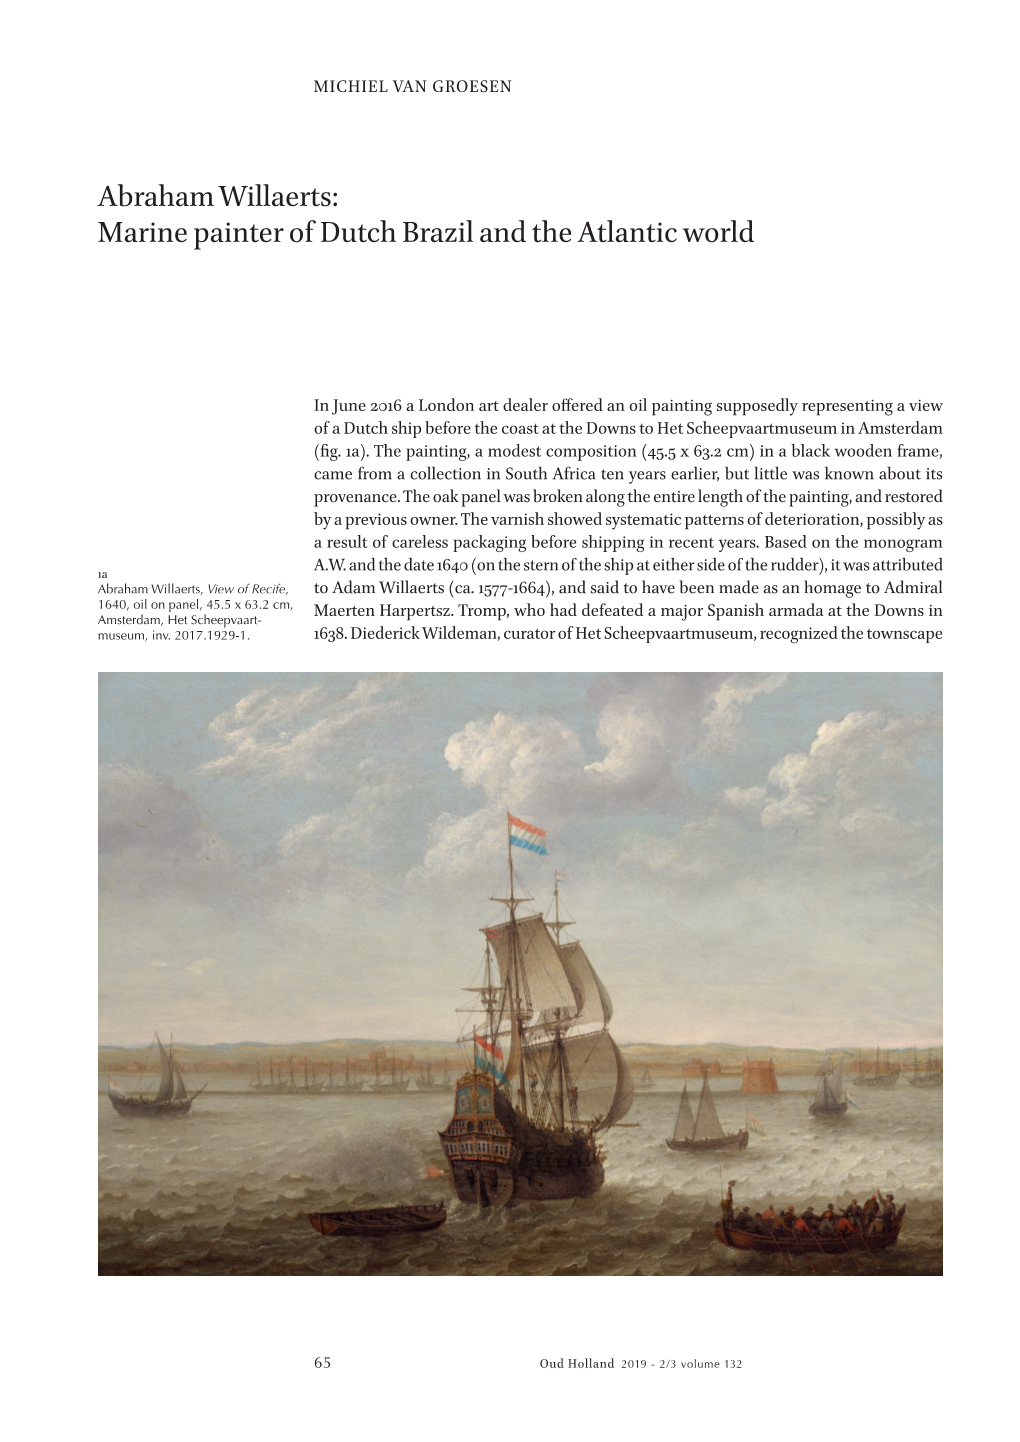 Abraham Willaerts: Marine Painter of Dutch Brazil and the Atlantic World